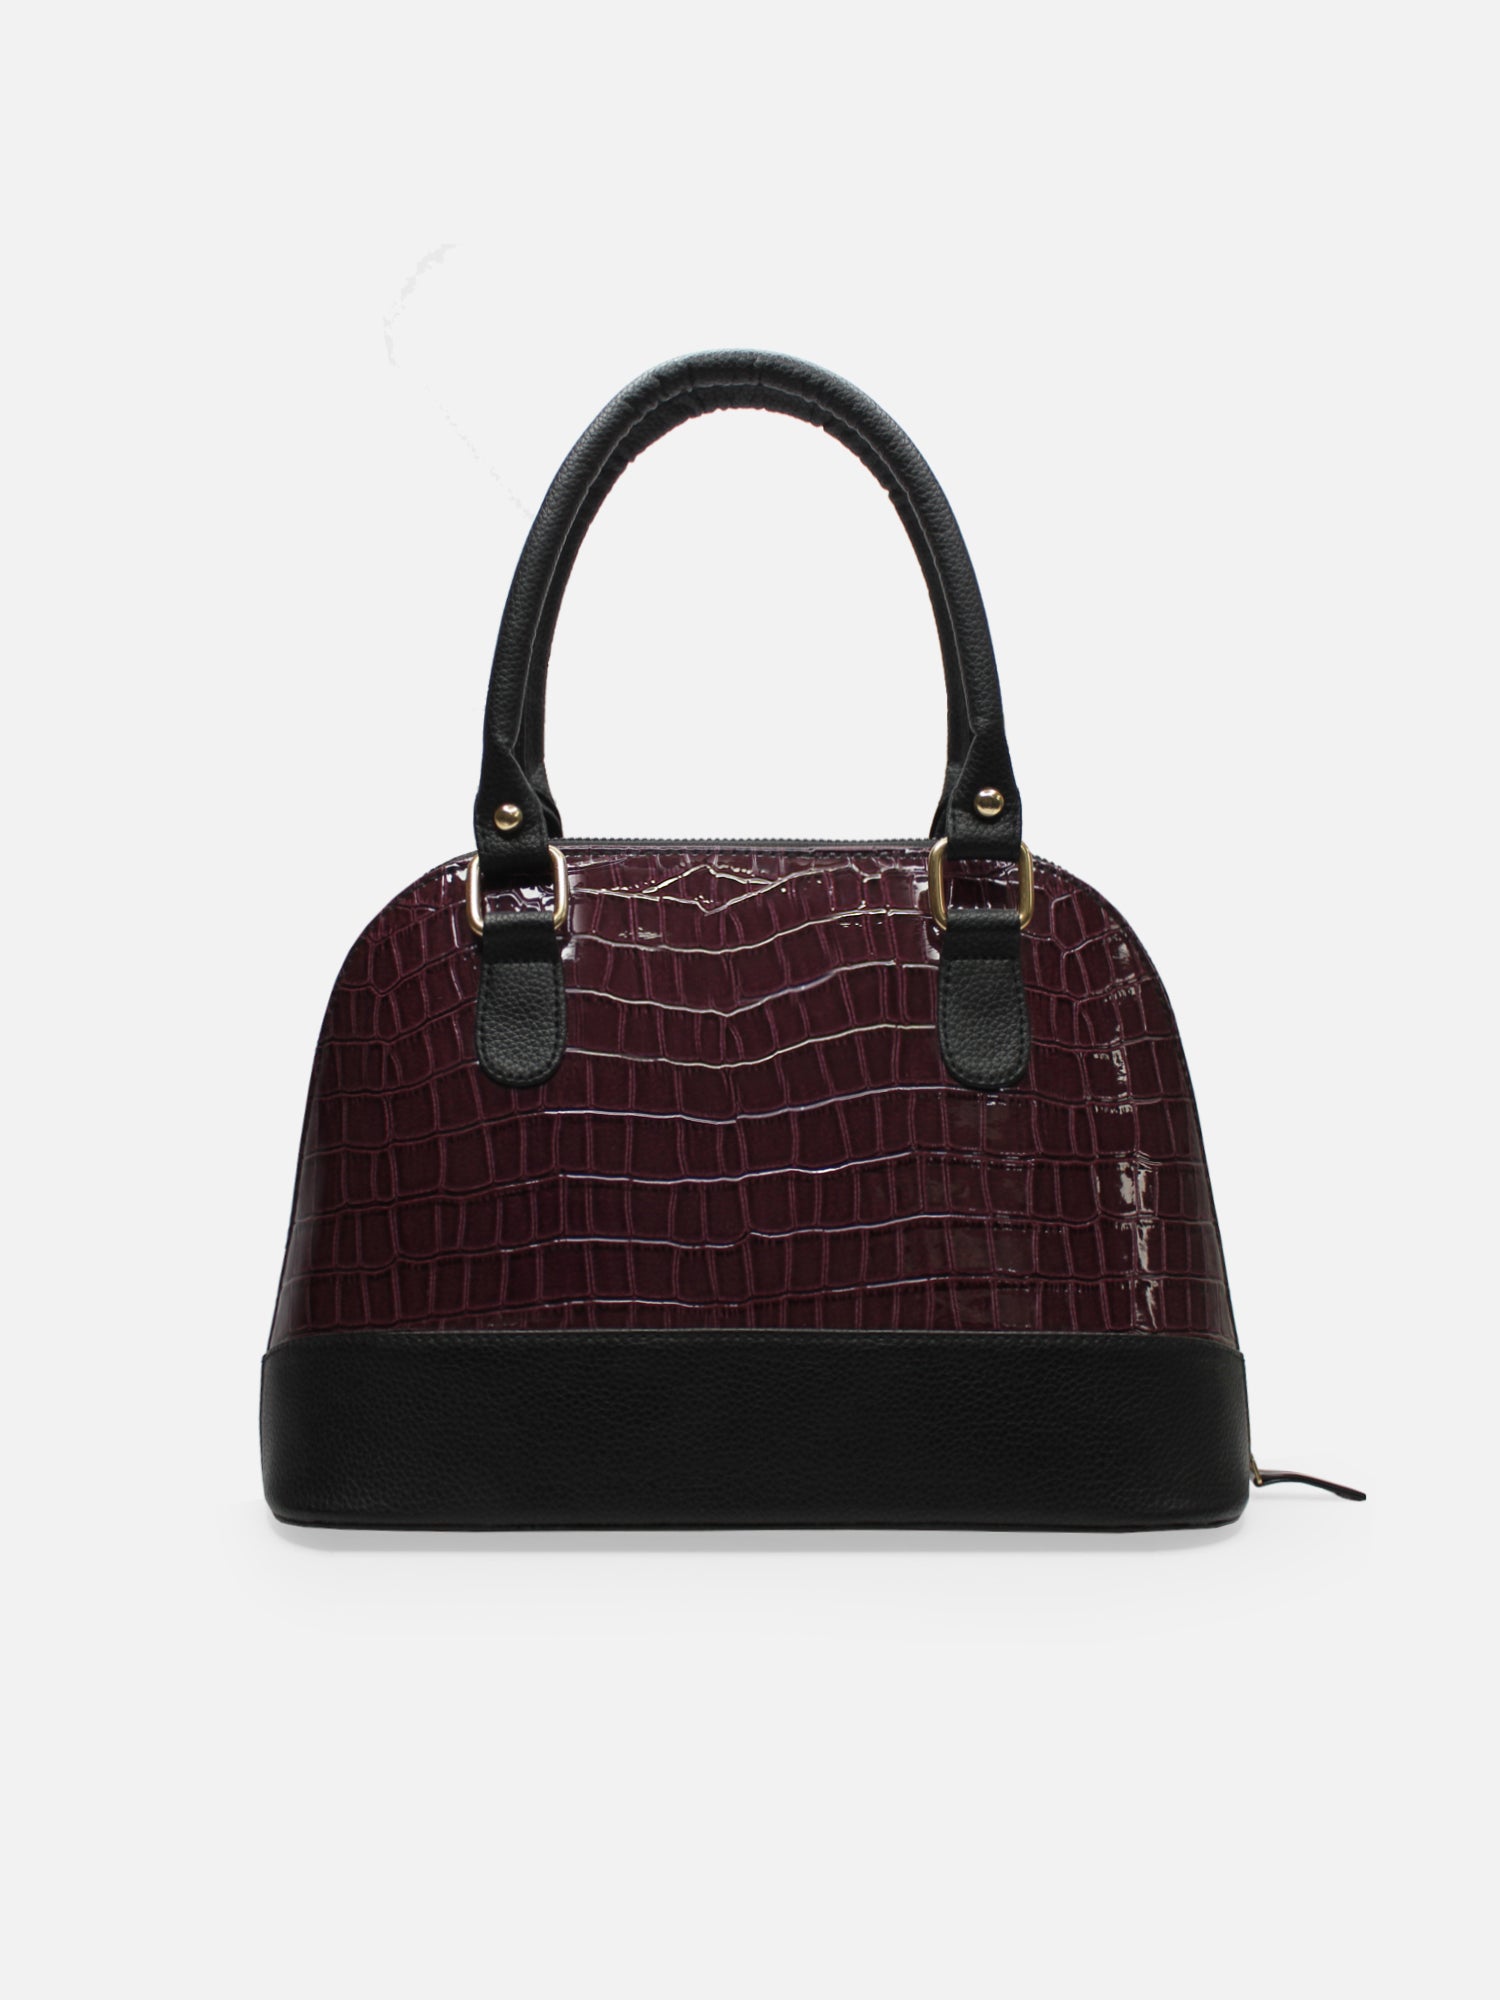 Buy Online Fashion Bazaar Shoulder & Handbags Pu Leather Bag Women's Ladies  & Girl's, Pink at Amazon.in